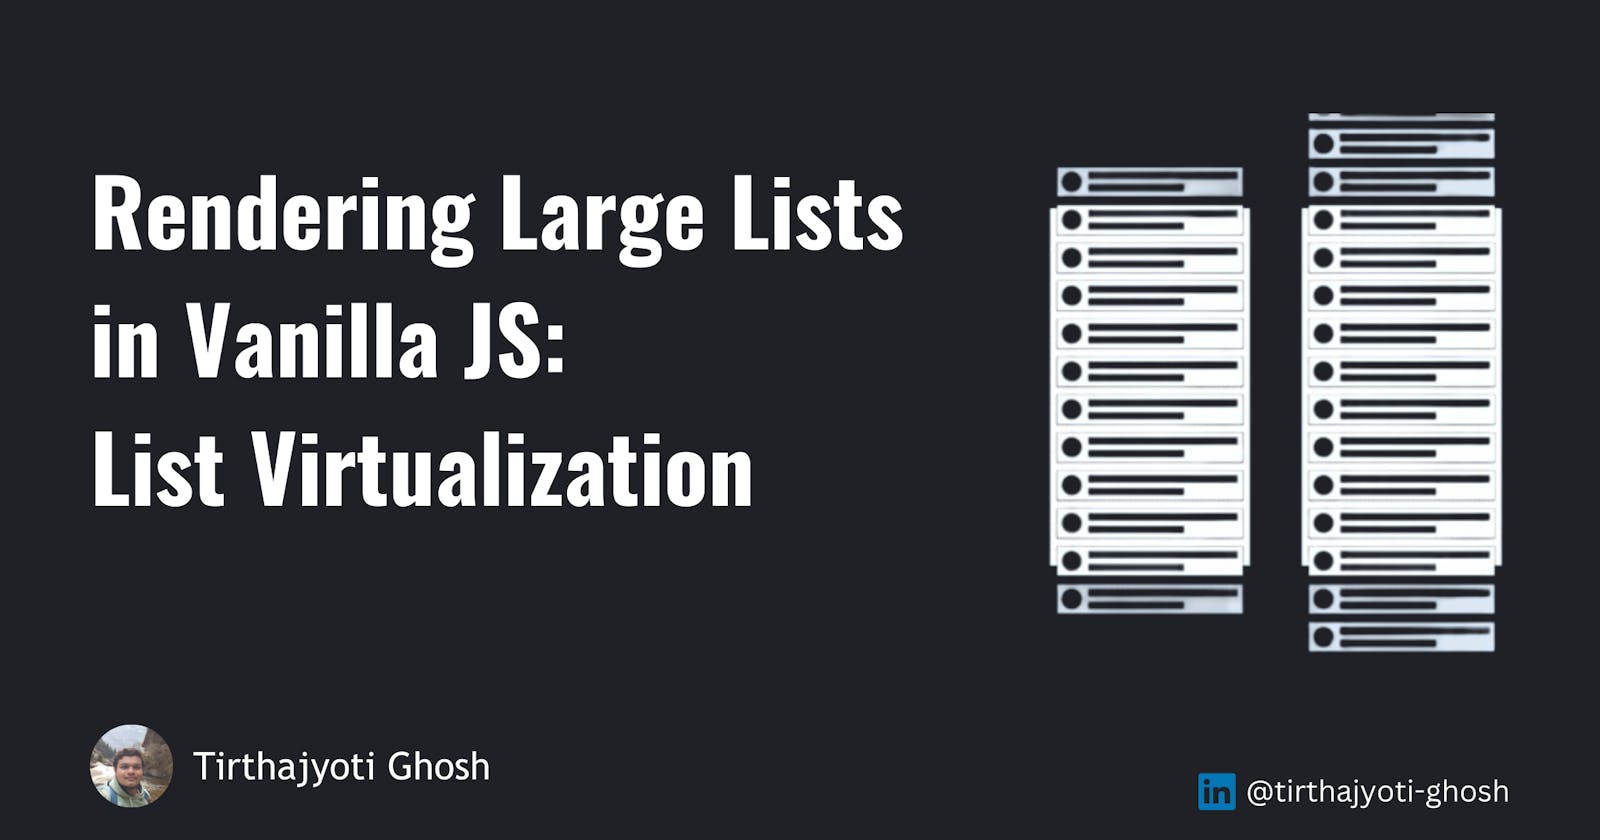 Rendering Large Lists in Vanilla JS:
List Virtualization